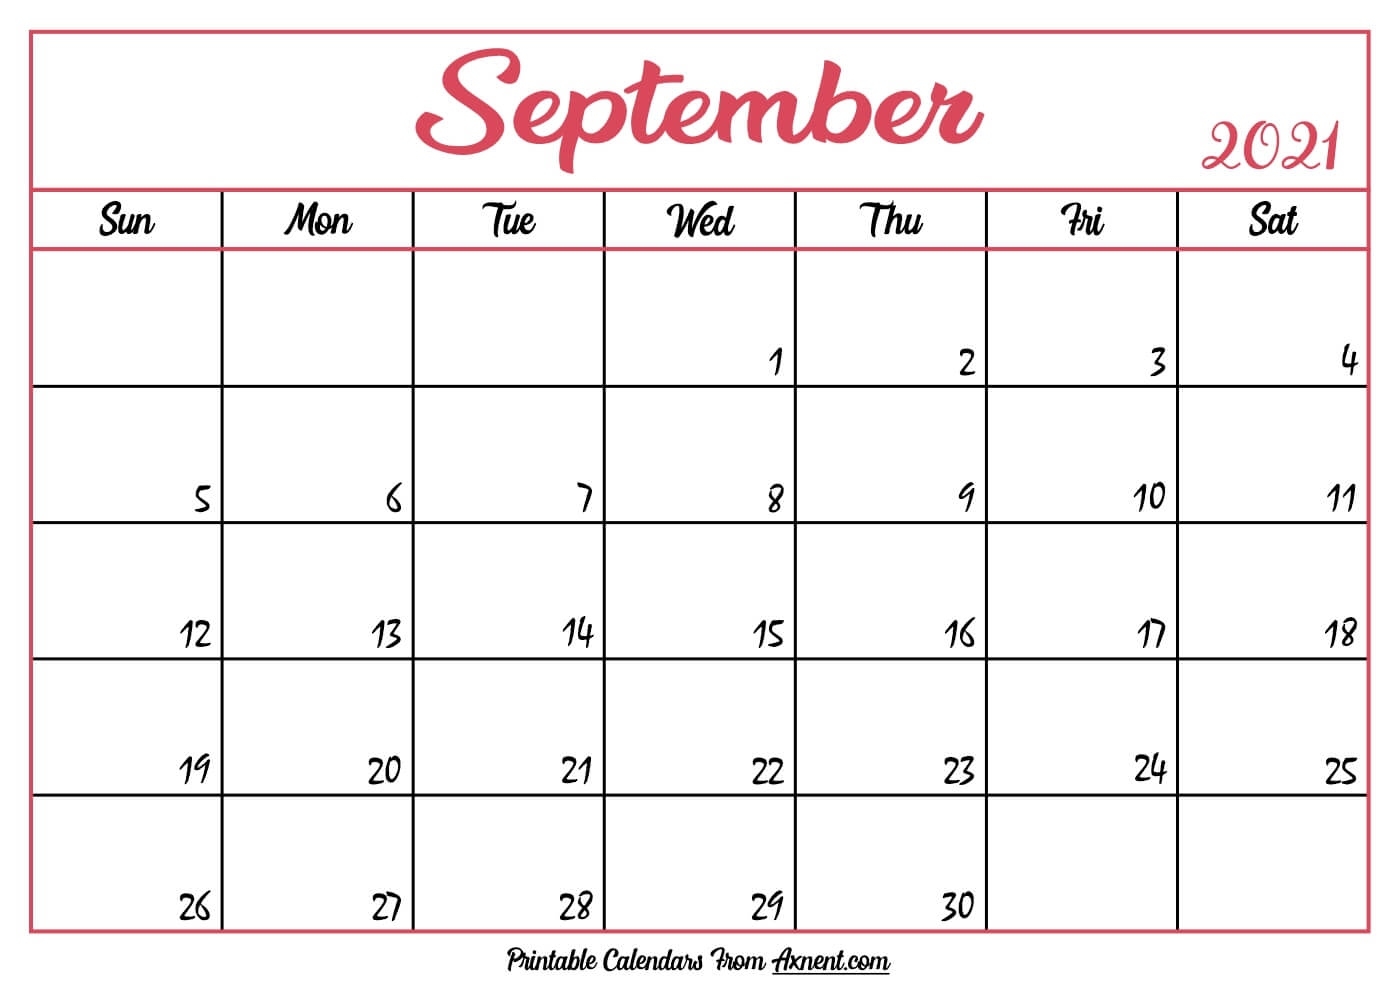 Printable September 2021 Calendar Template - Time Management Tools Printable September 2021 September 2021 Calendar Reading